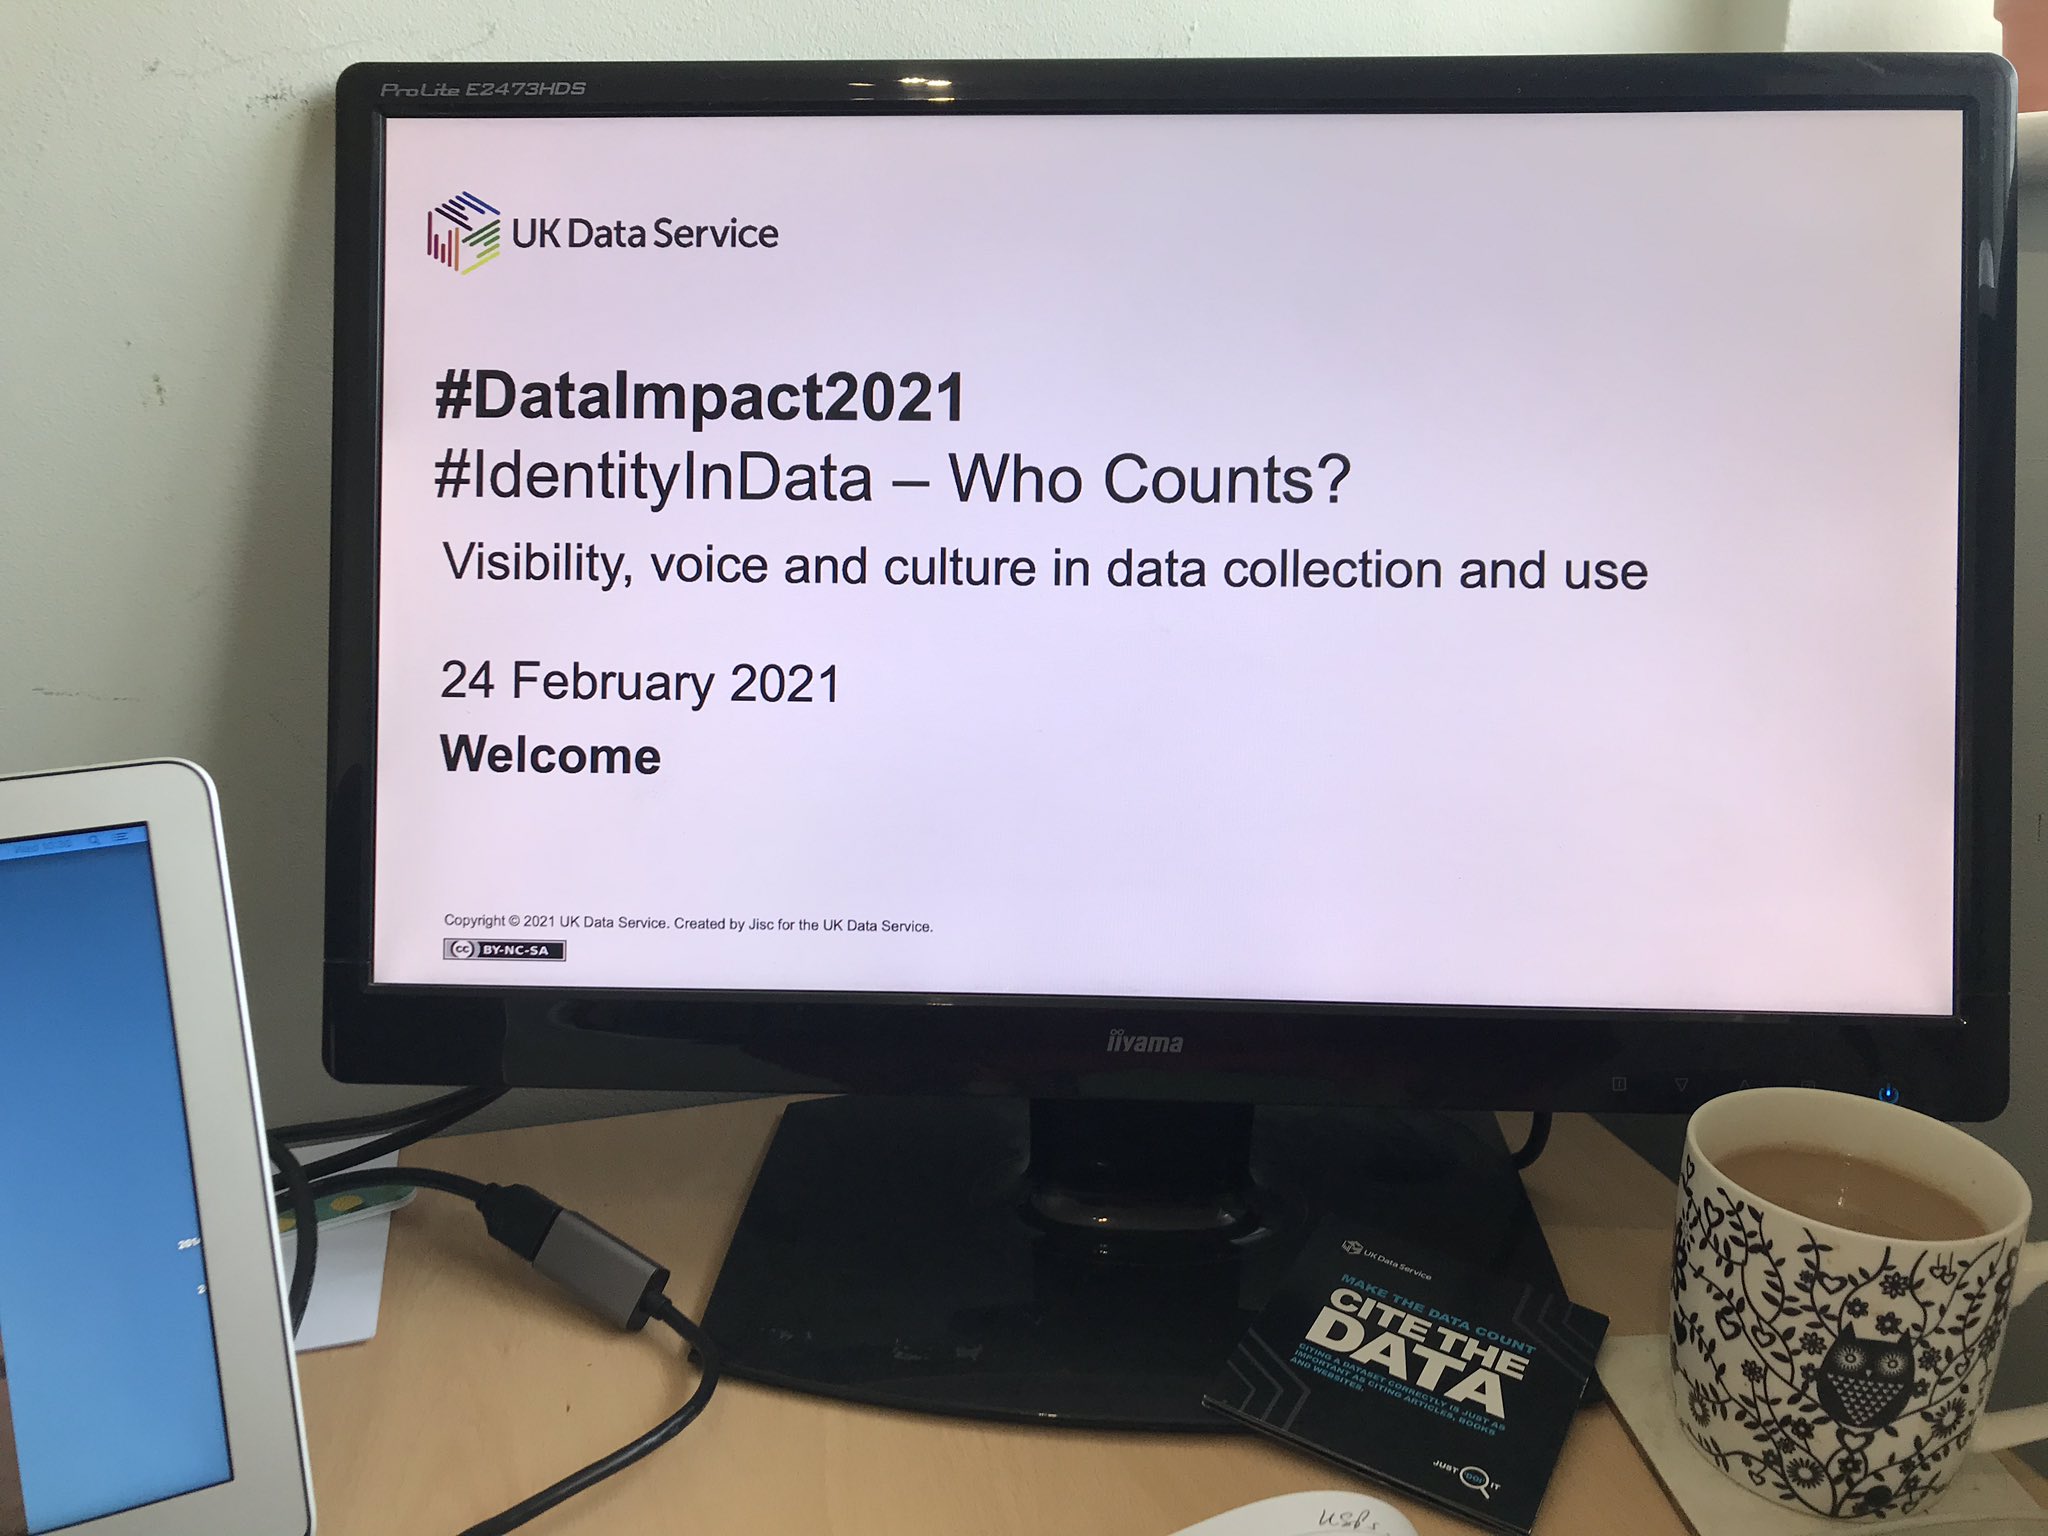 Data Impact 2021 #IdentityInData online event